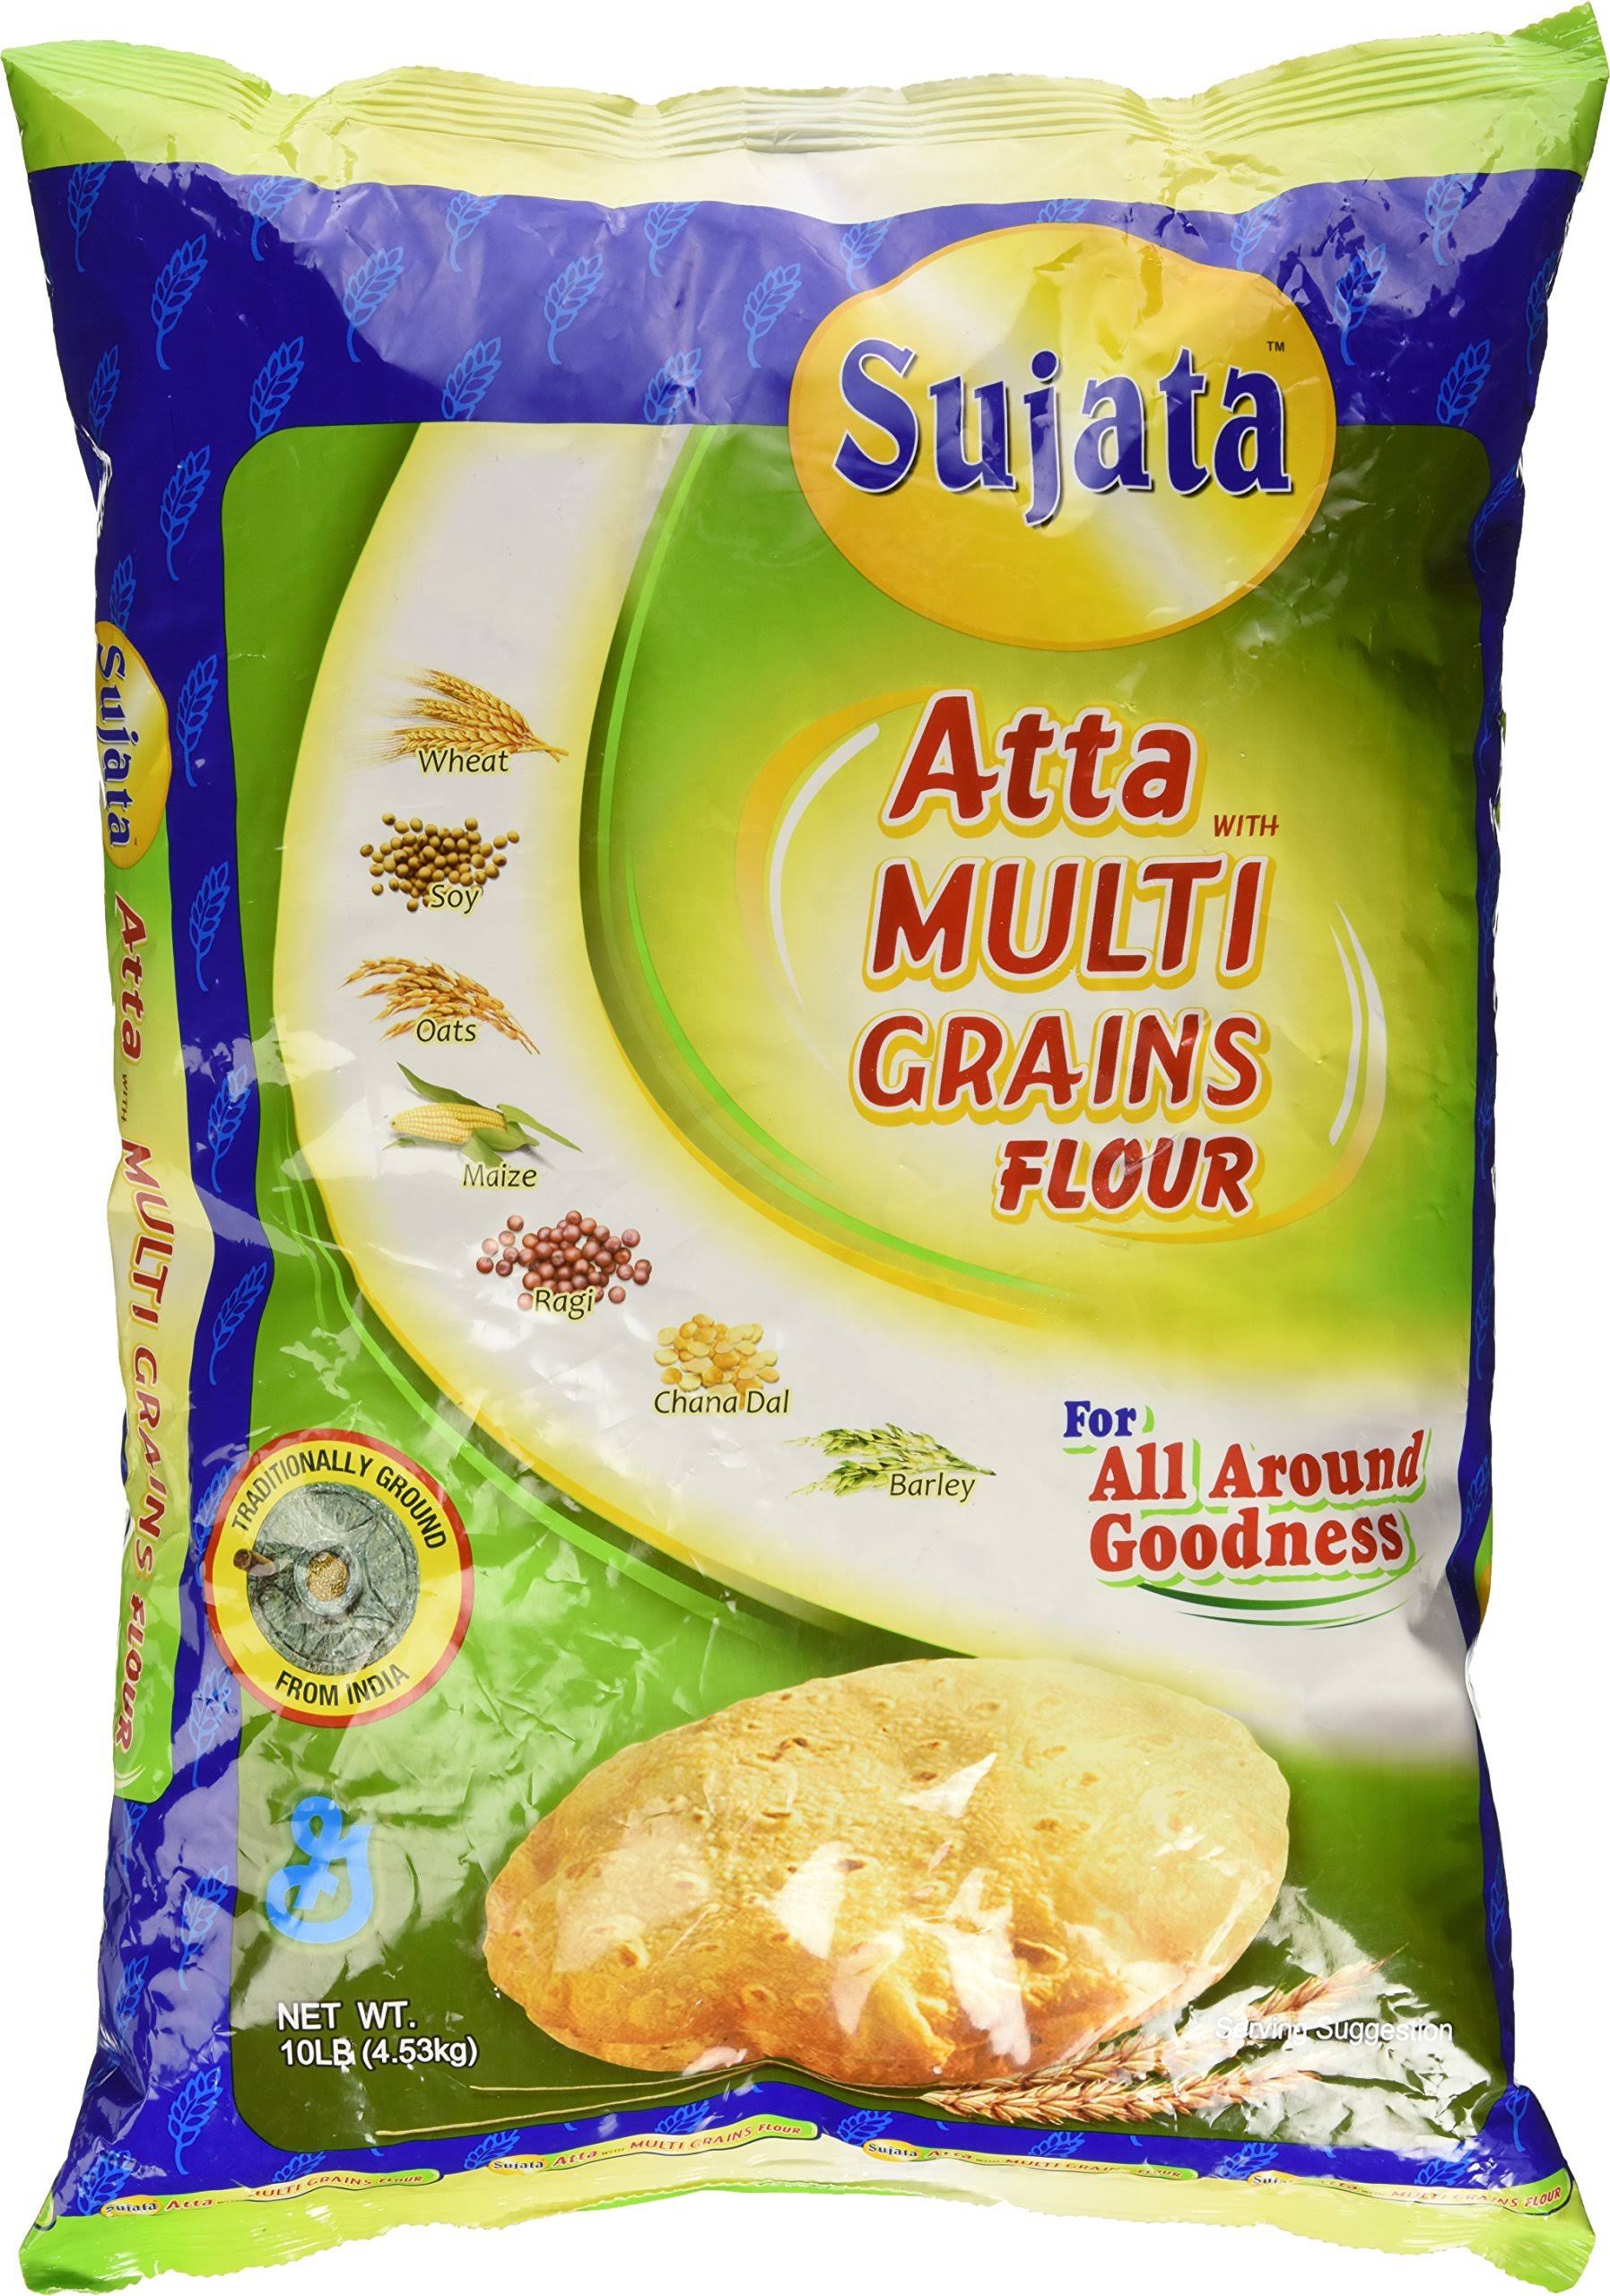 Pillsbury Sujata Atta with Multi-Grains Flour 10lb